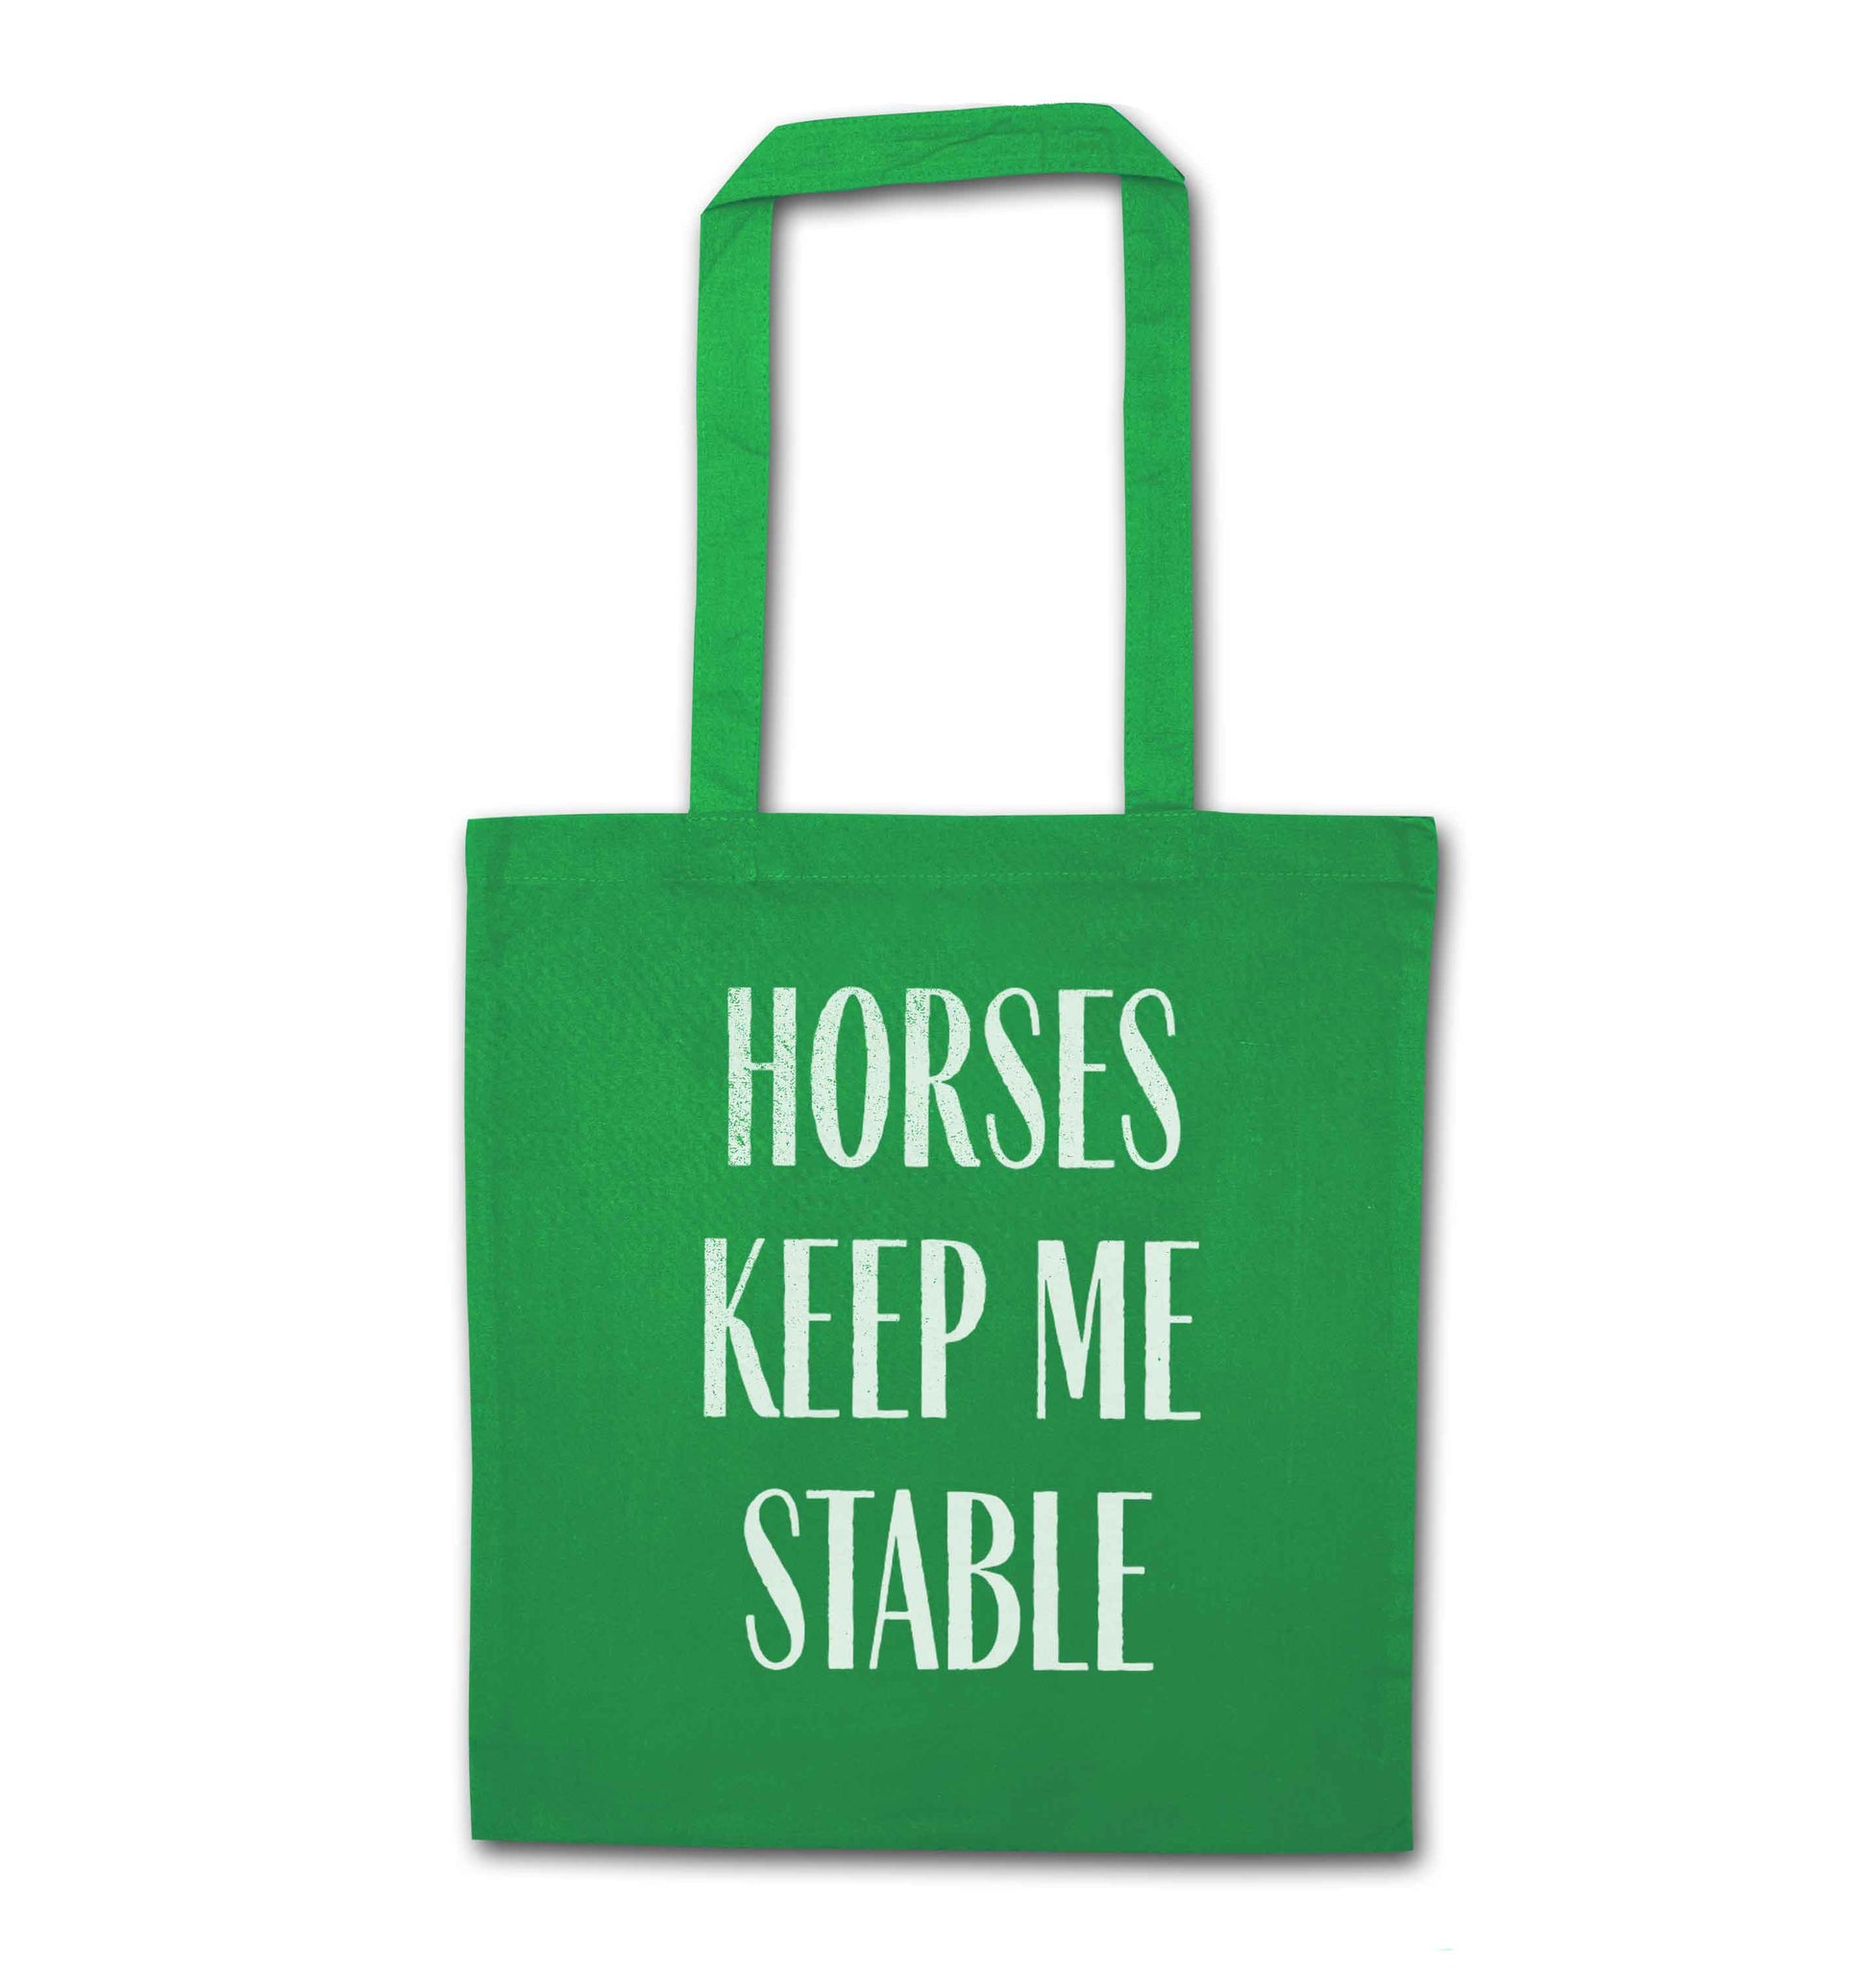 Horses keep me stable green tote bag